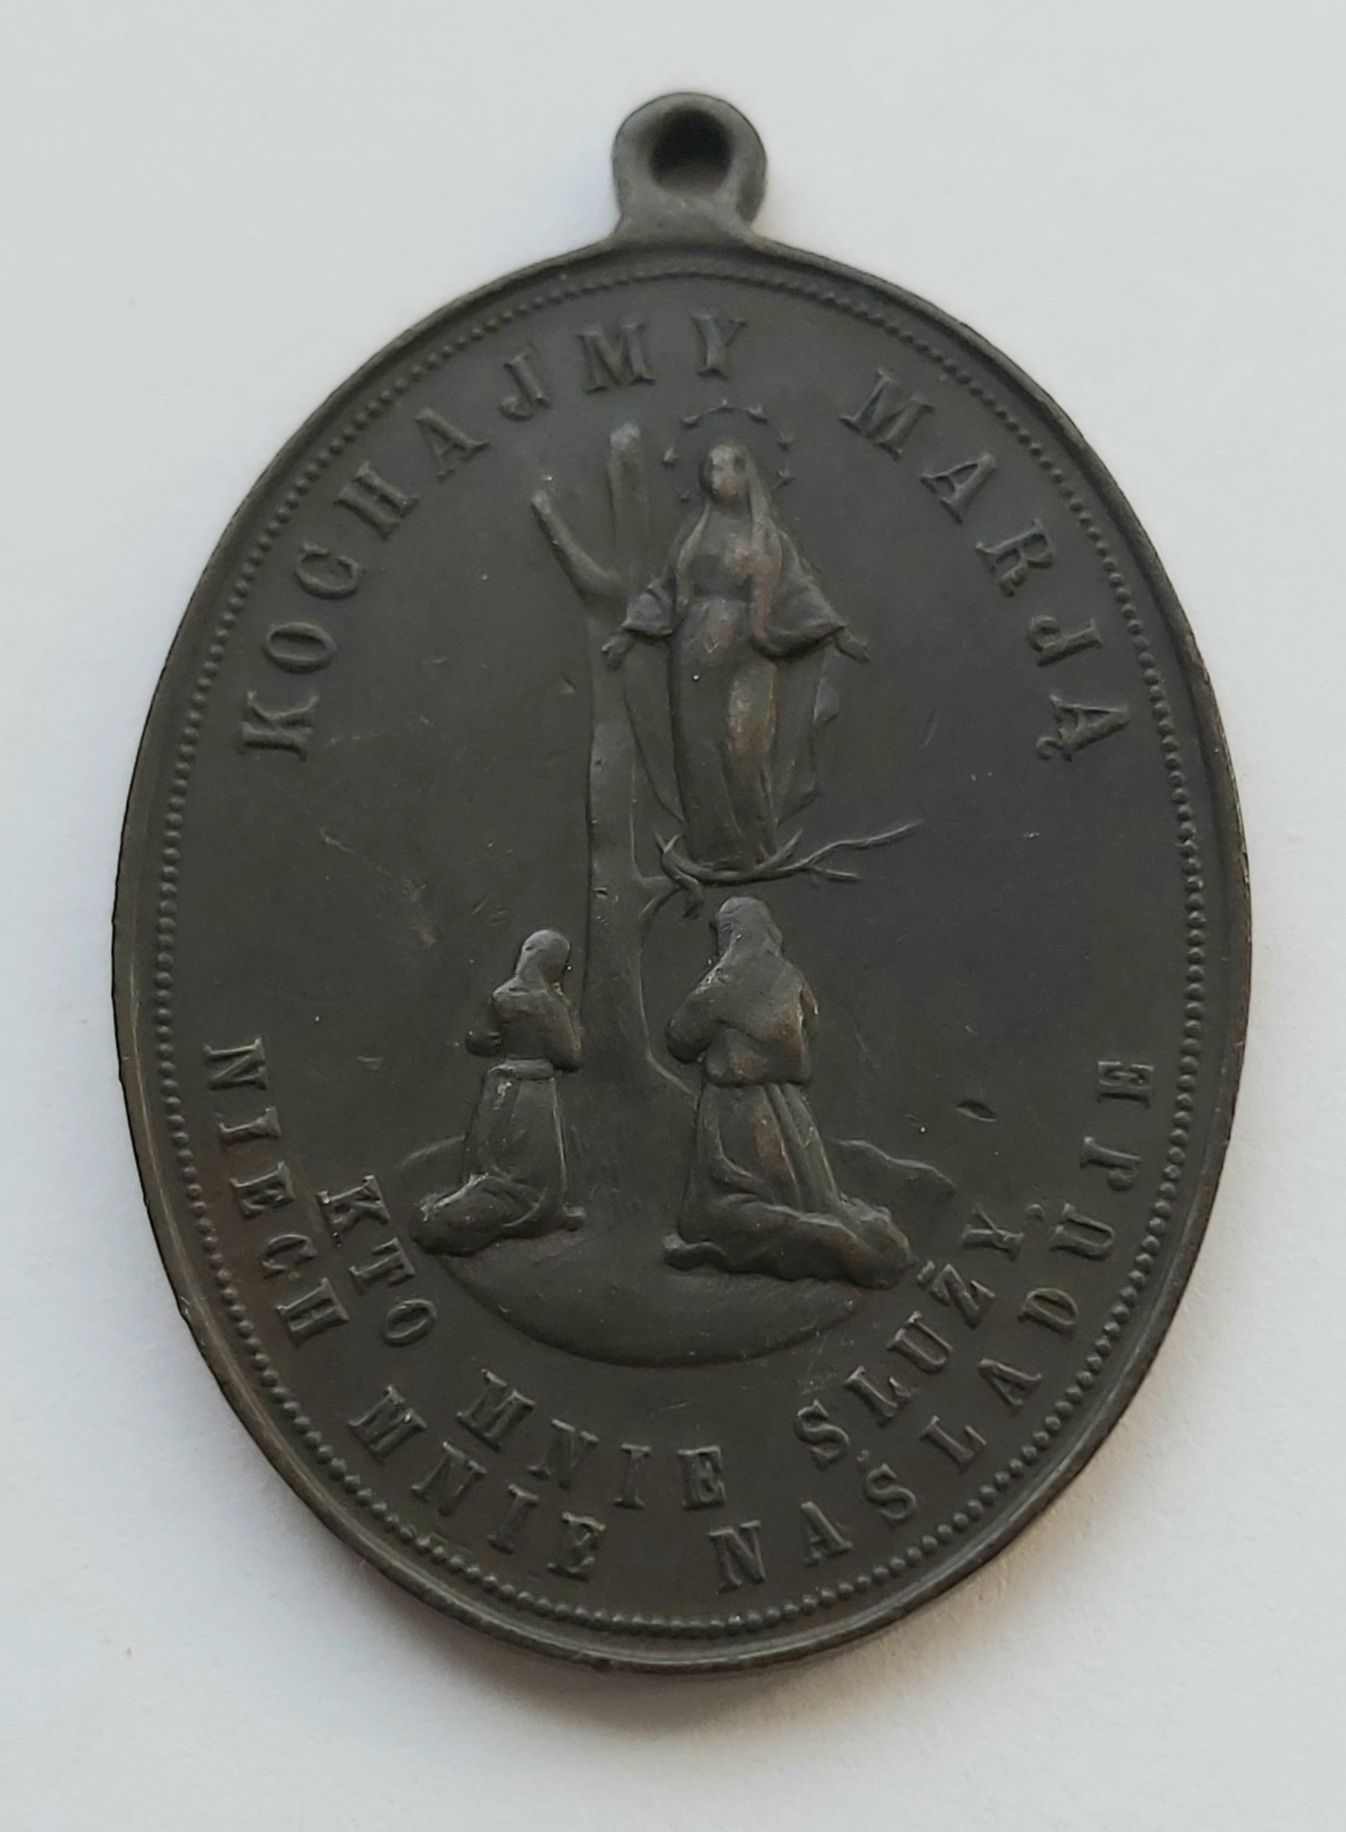 Medalie Sfanta Maria si Isus Hristos